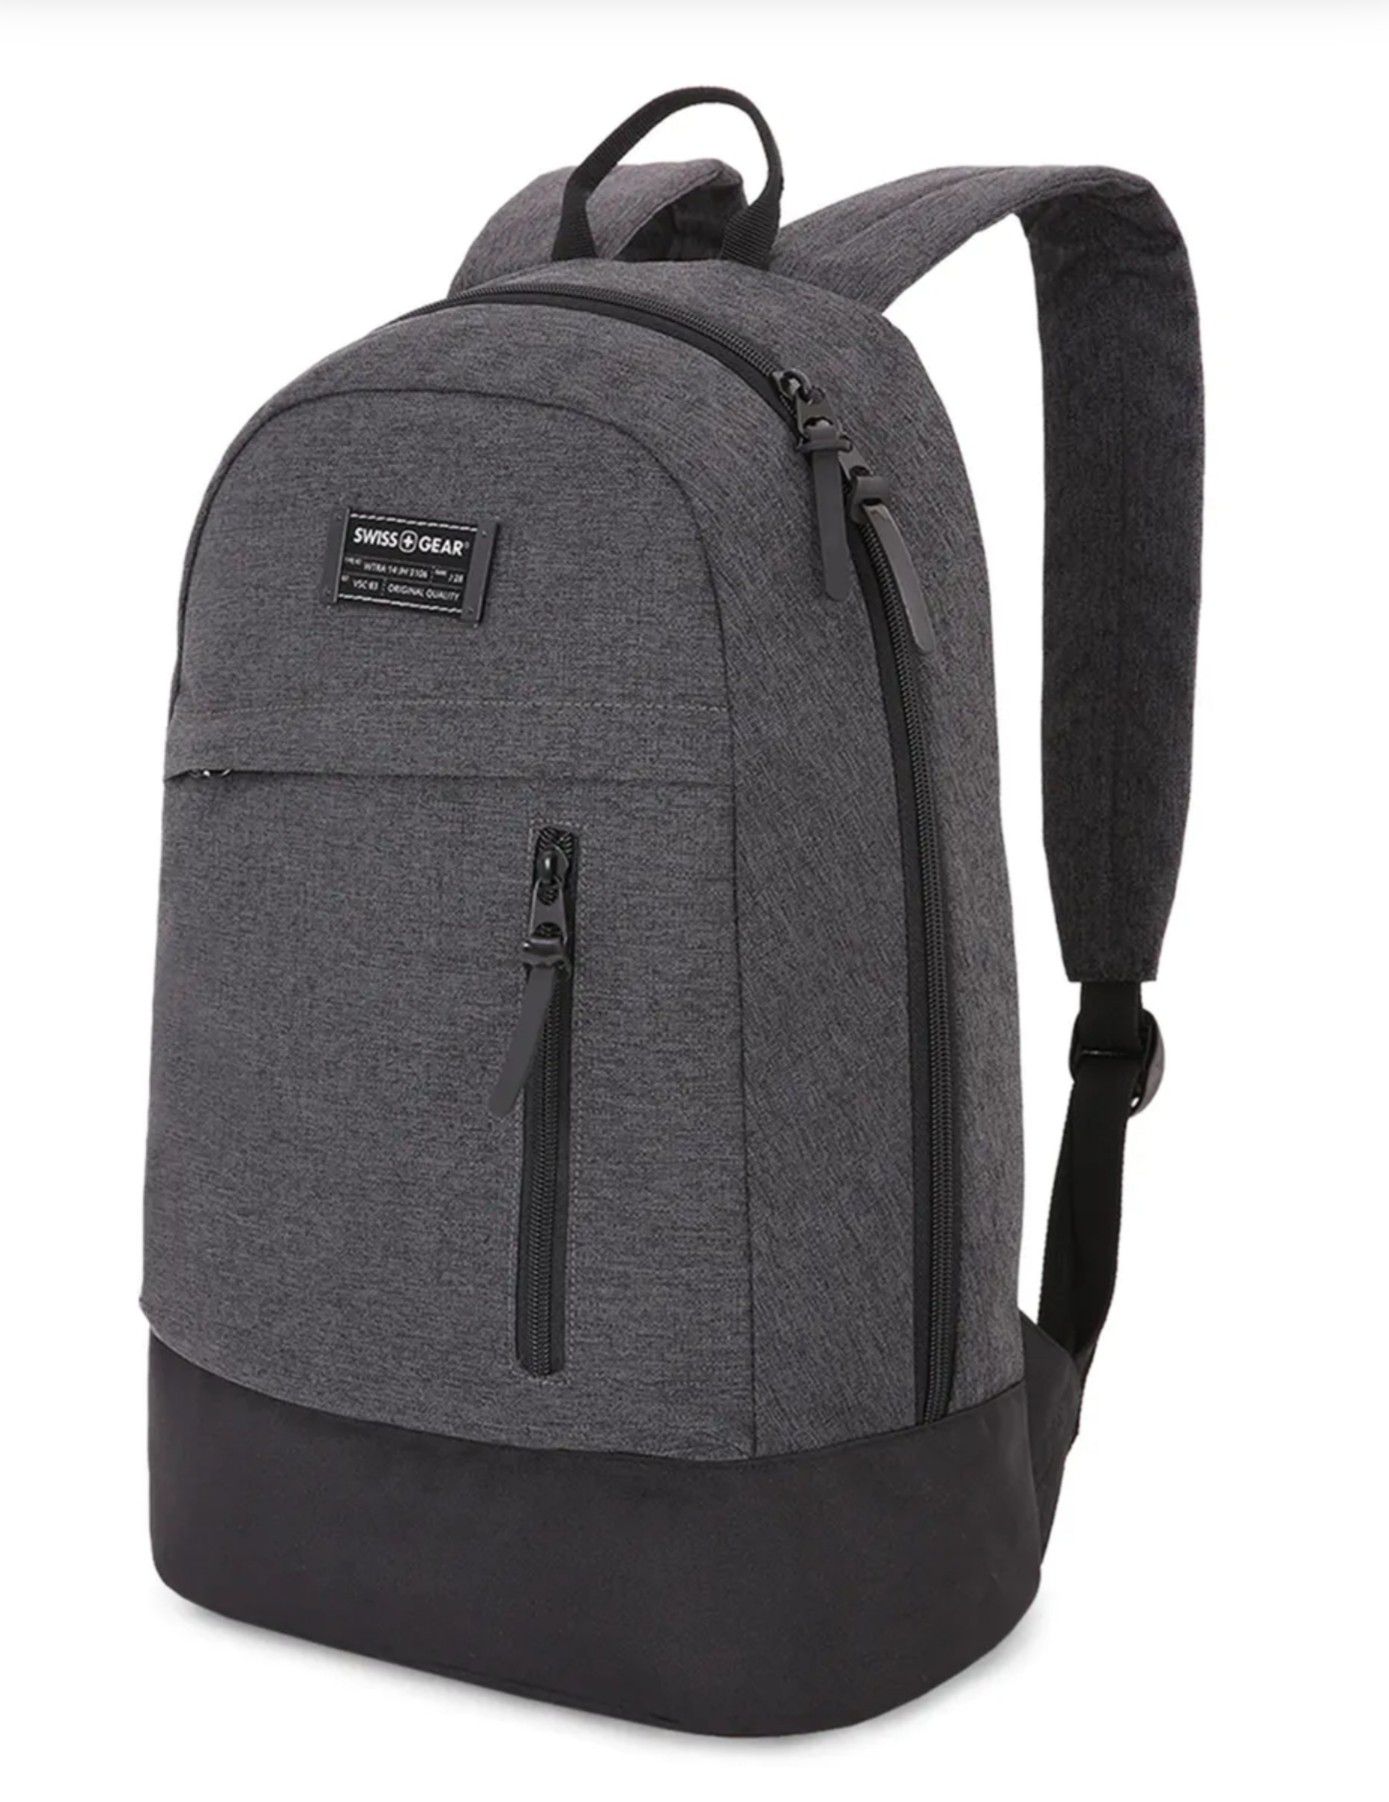 SwissGear Getaway Daypack in a heather gray laptop backpack